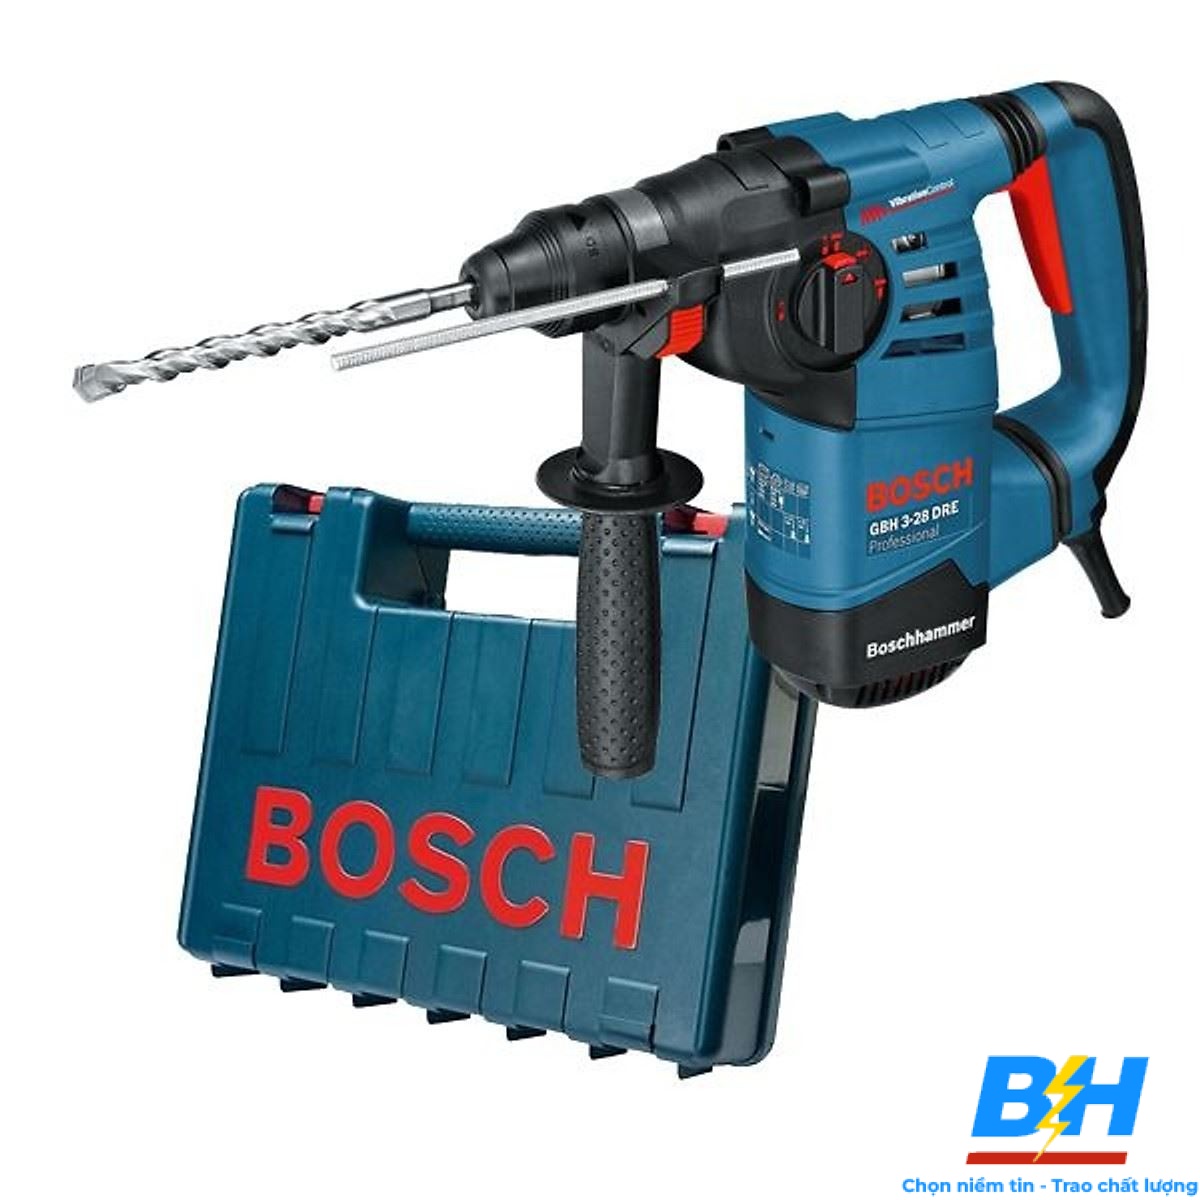 Máy Khoan Búa 800W Bosch GBH-3-28DRE